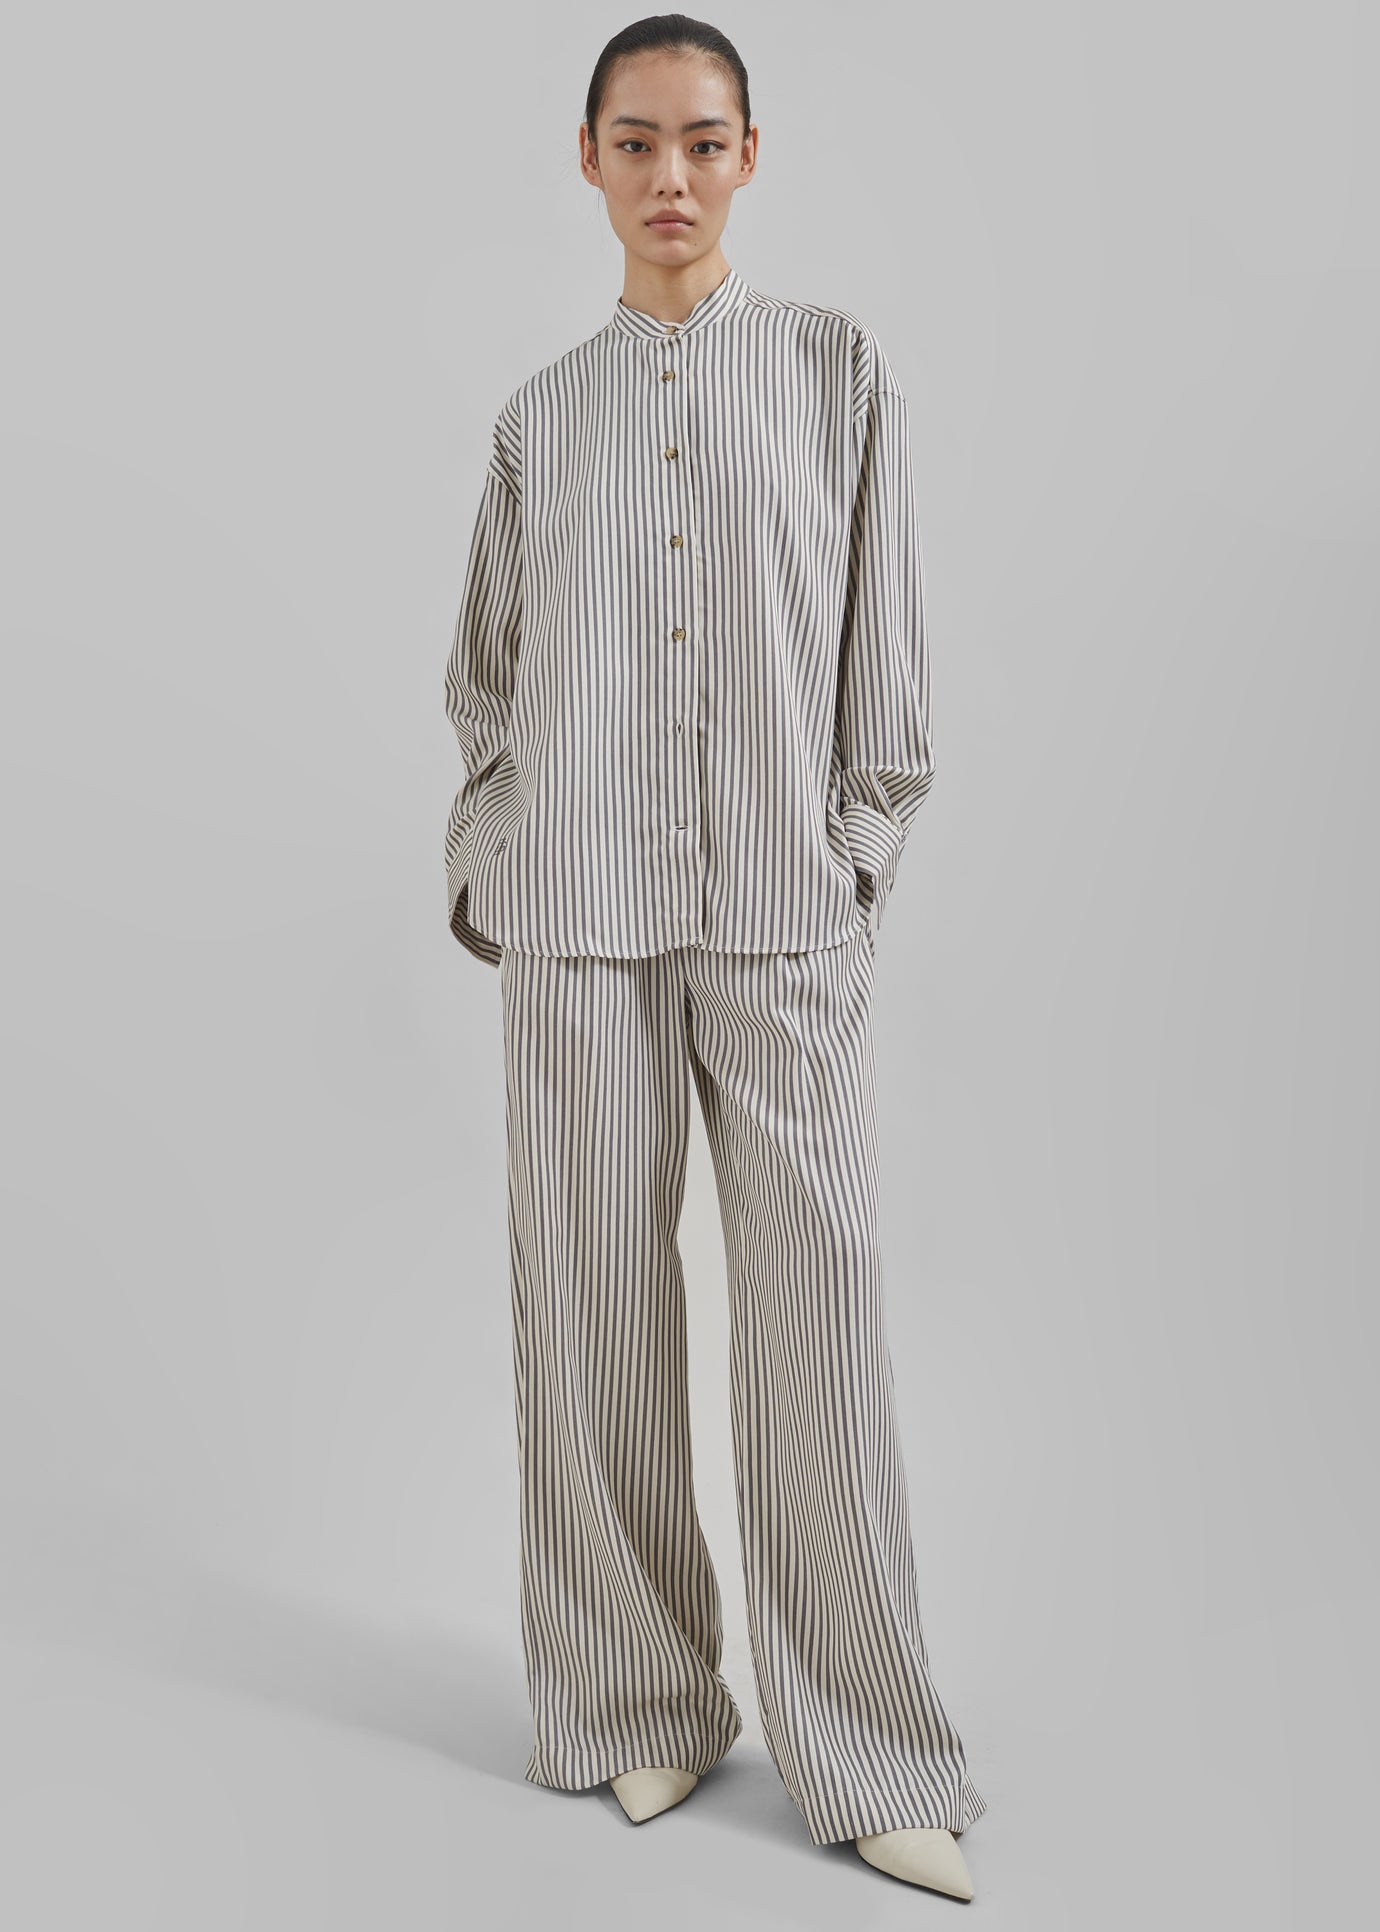 The Garment Vence Shirt - Cream/Grey Stripe